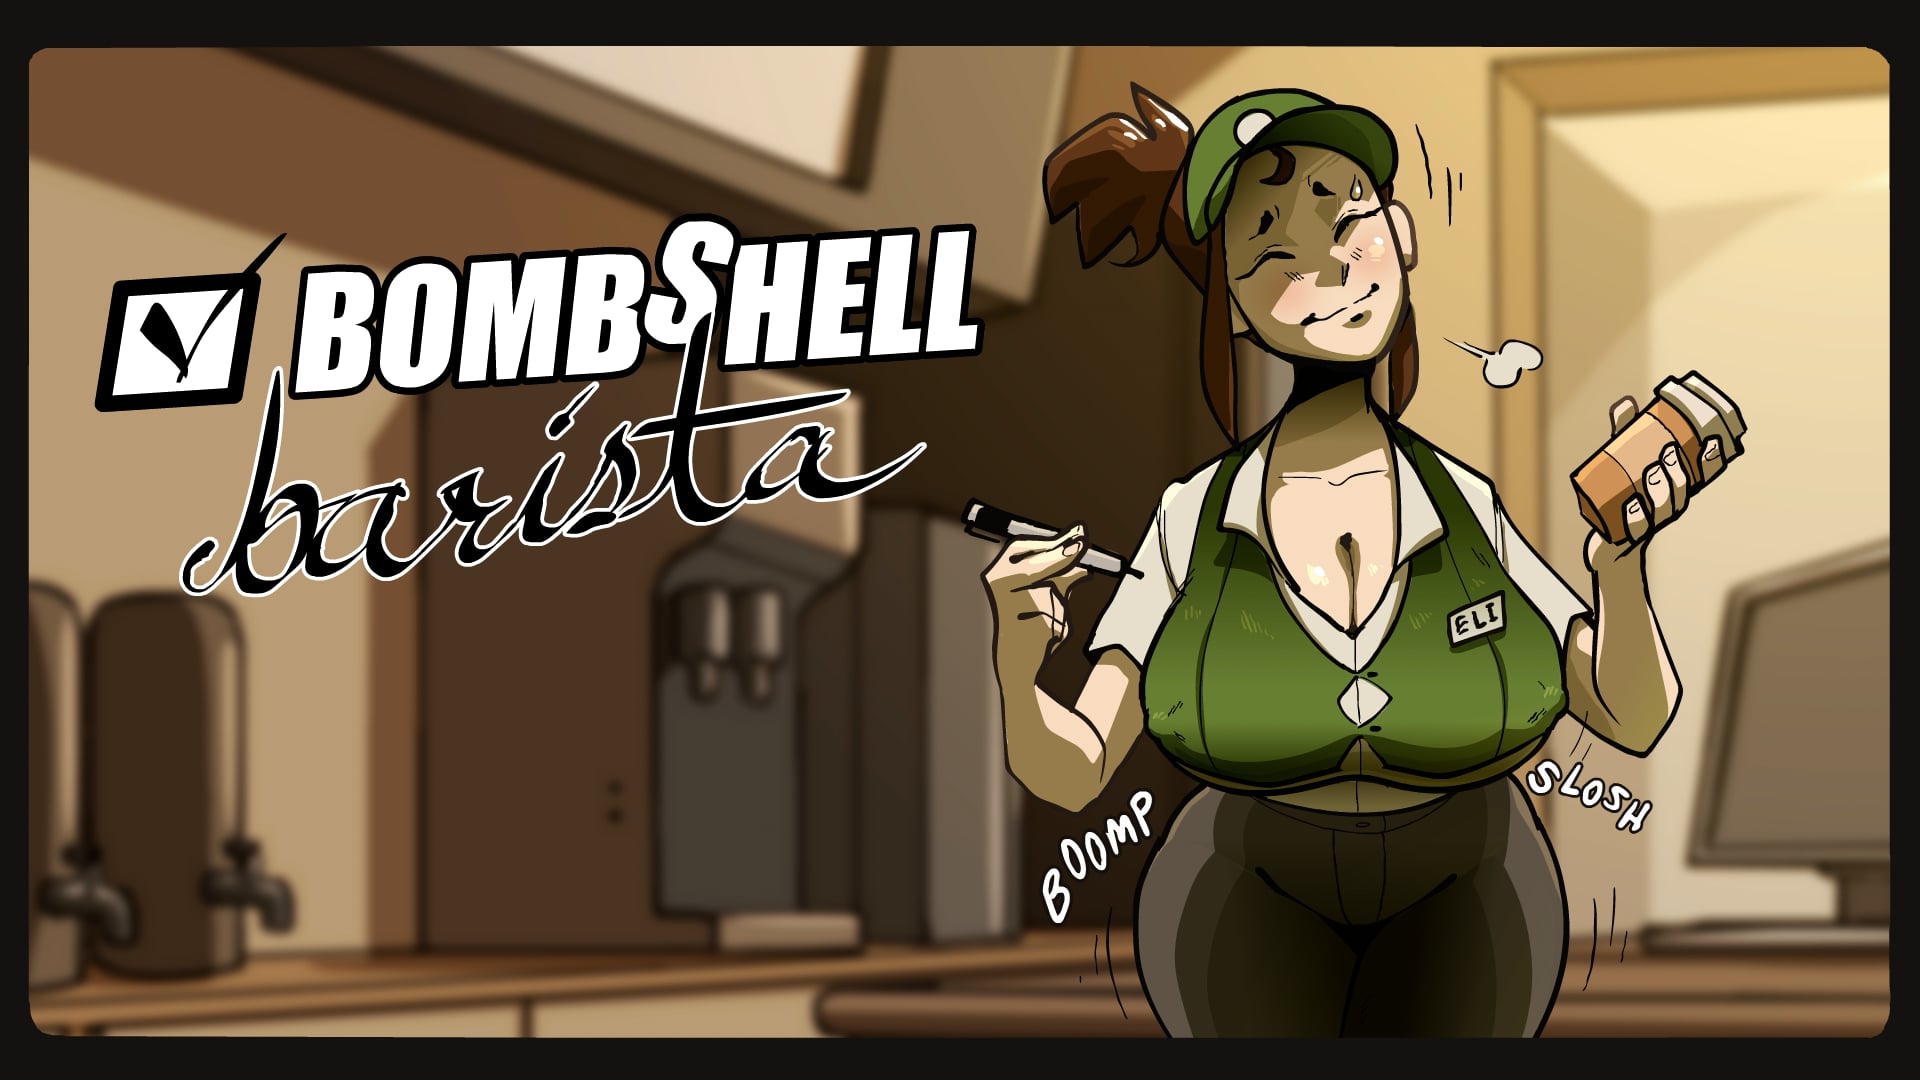 Bombshell barista by tailblazer